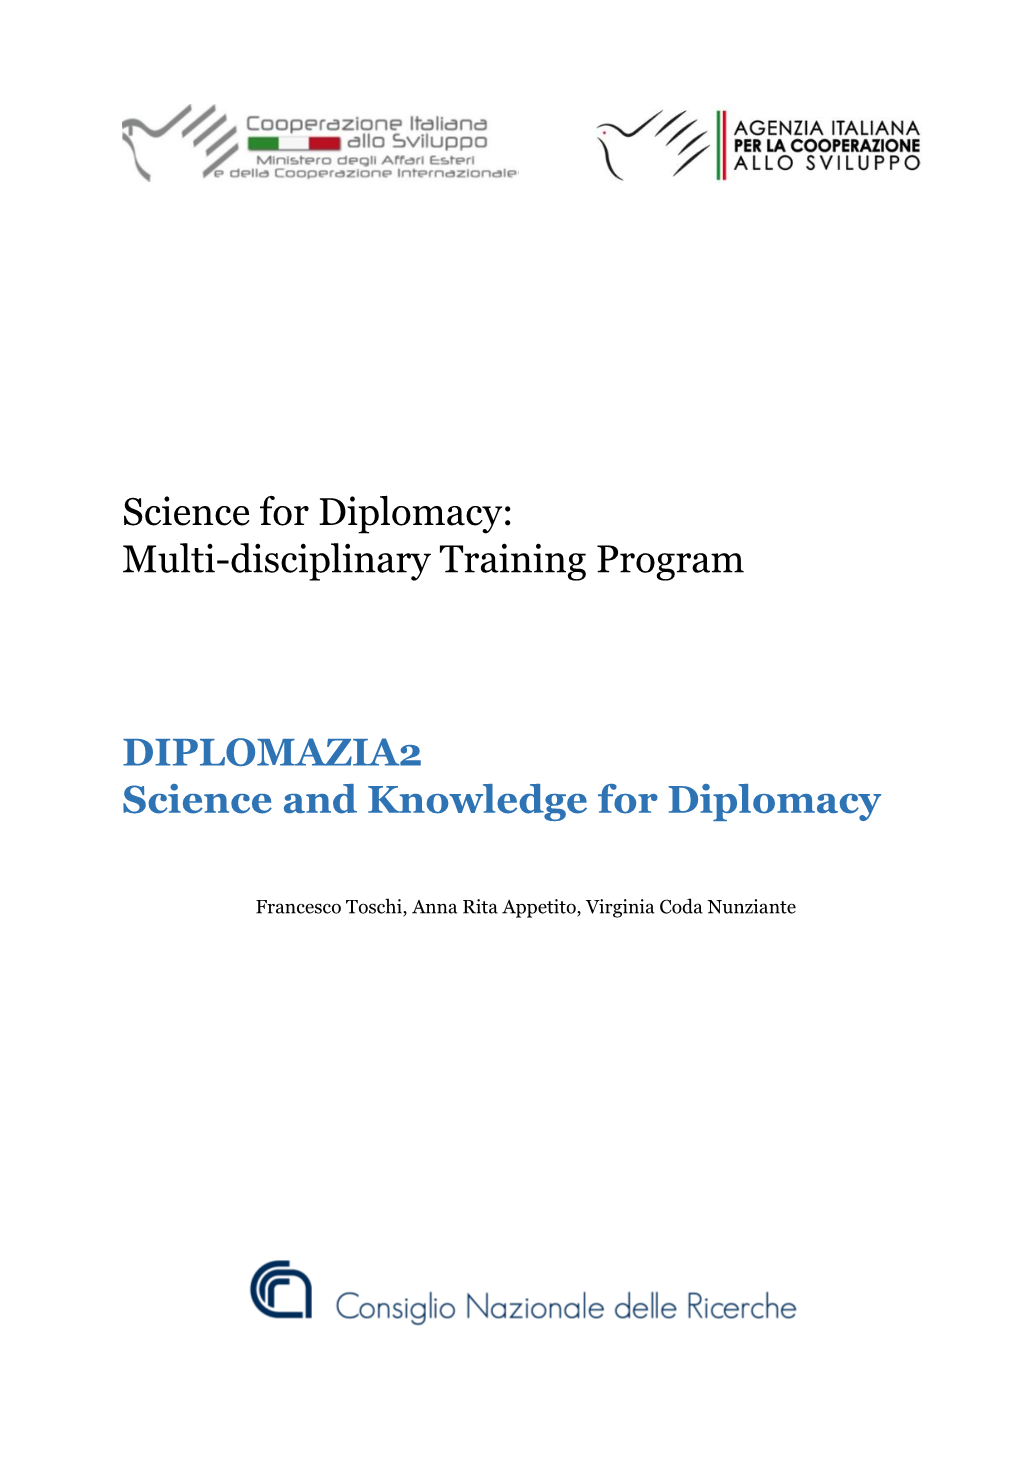 Science for Diplomacy: Multi-Disciplinary Training Program